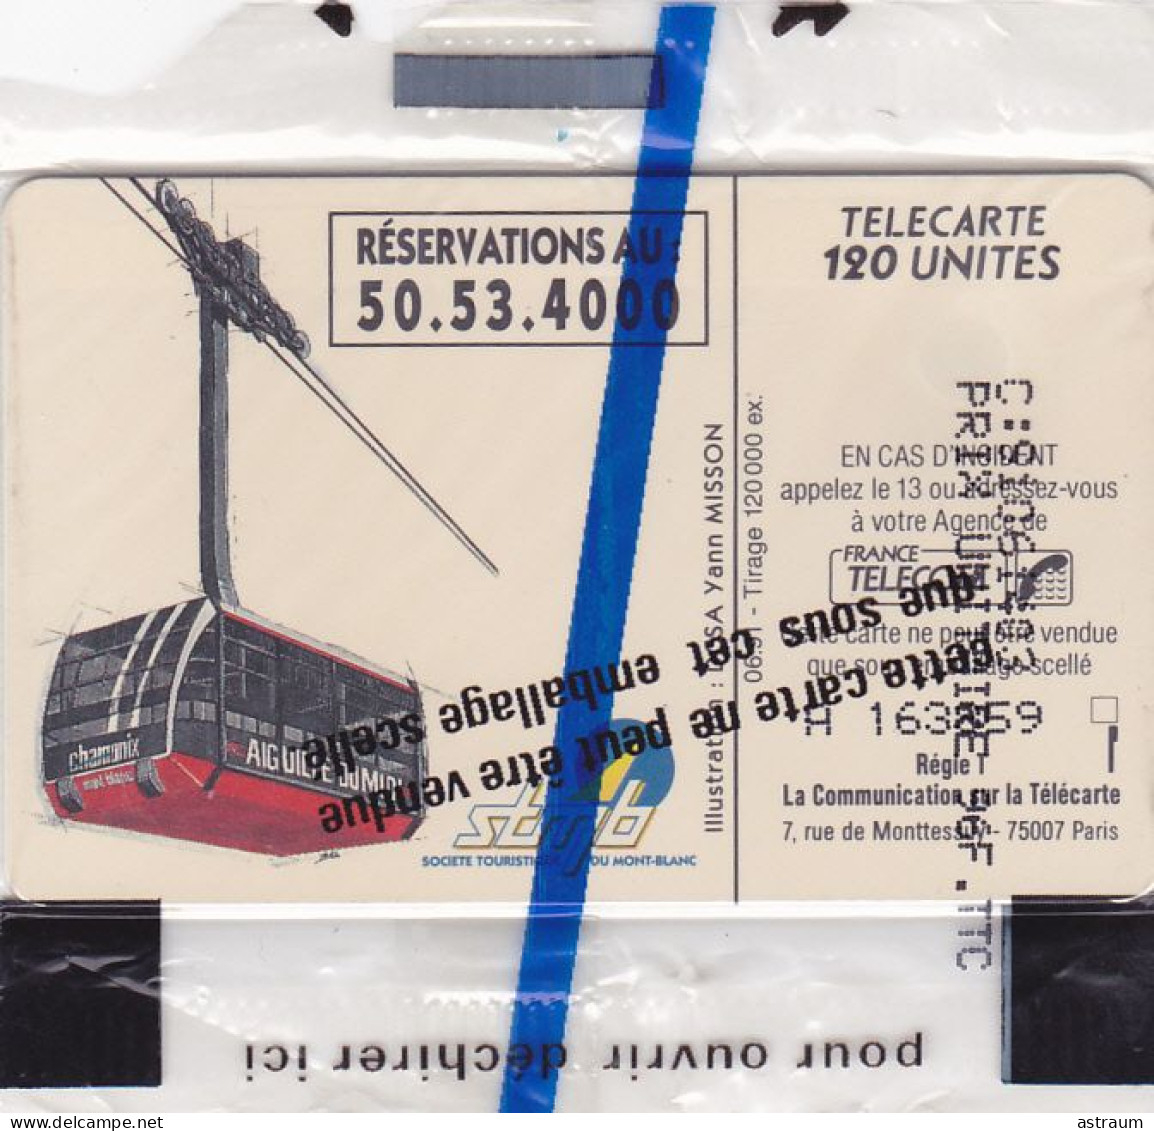 Telecarte Publique F158 NSB - Aiguille Du Midi - So3 - 120 U - 1991 - 43000 Ex - 1991